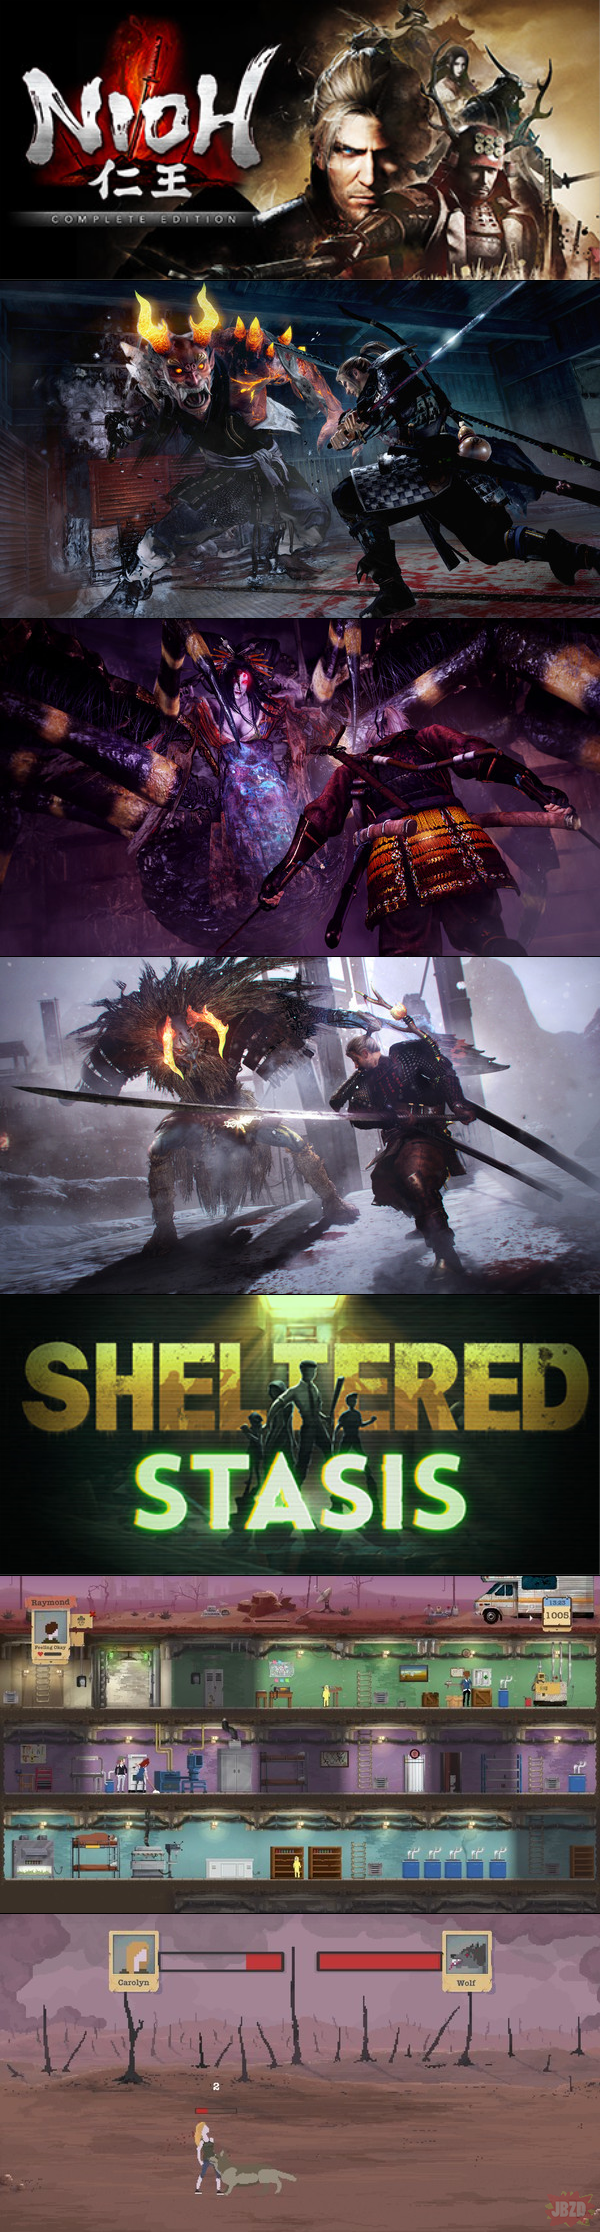 Nioh: The Complete Edition i Sheltered za darmo w epic games store